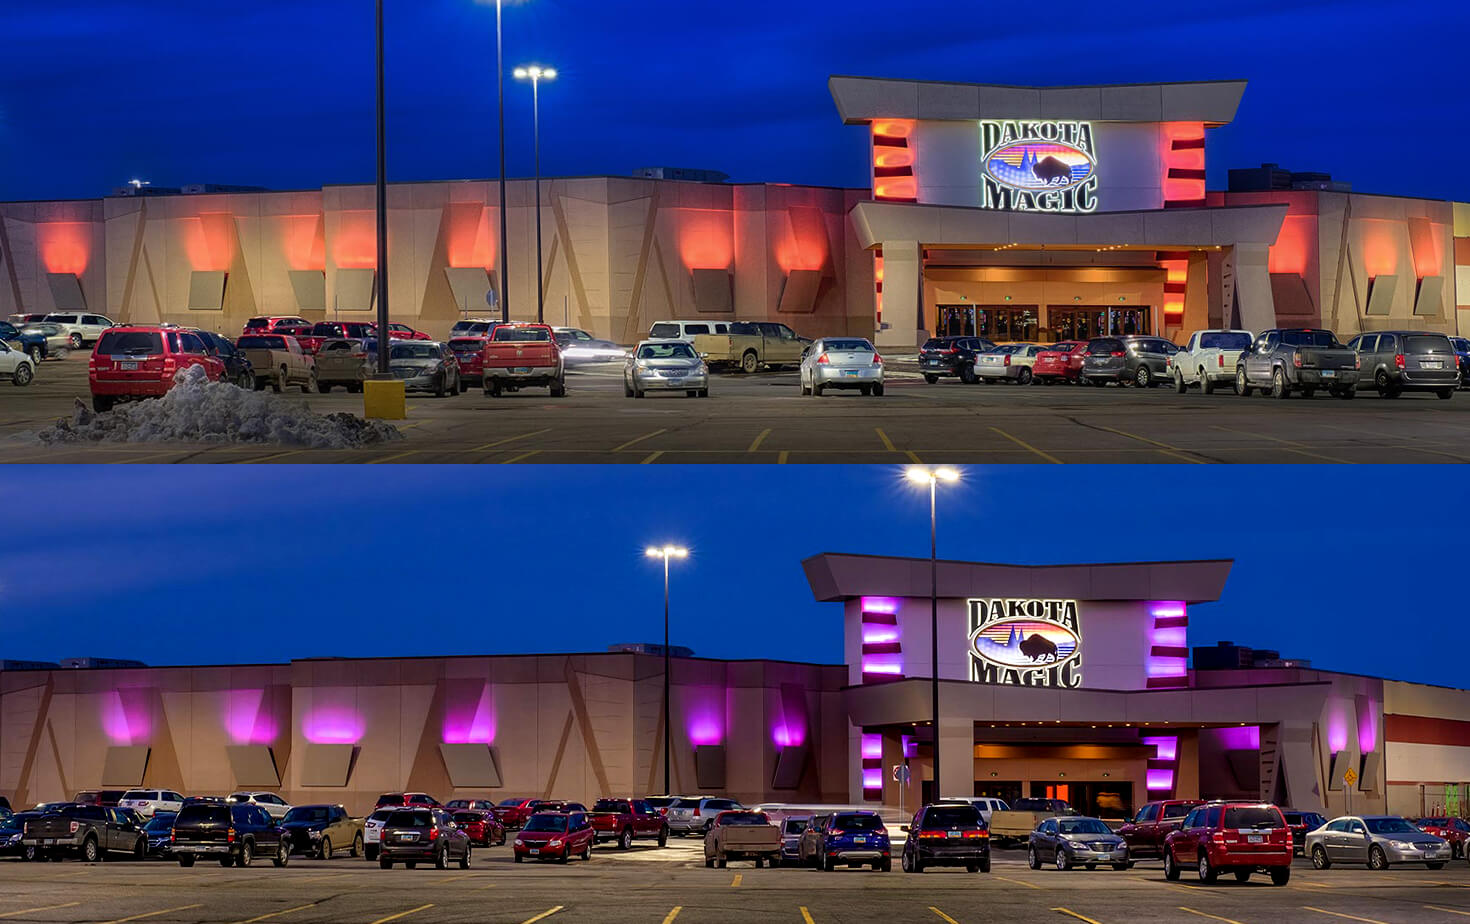 Dakota Magic Casino Hankinson ND Building Exterior Architectural Lighting and Channel Letters Purple and Orange Lighting